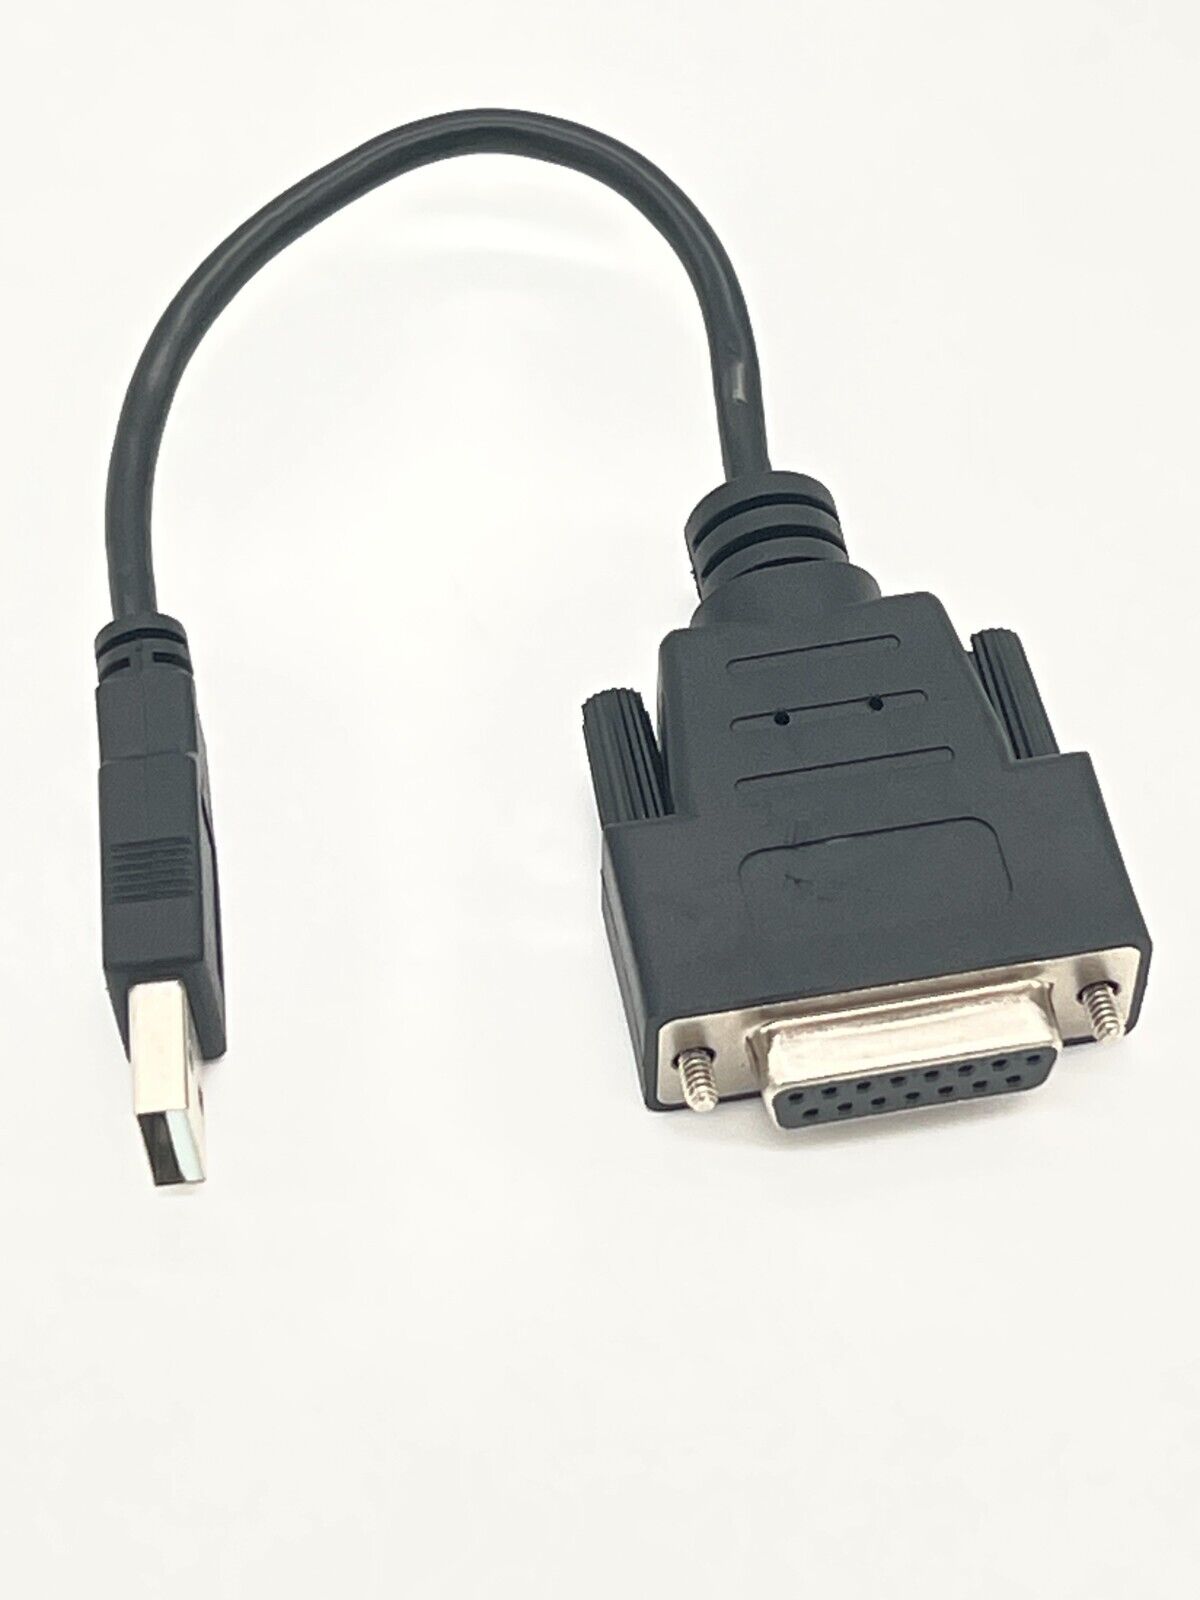 USB to Gameport DB15 Adapter Microsoft Sidewinder Logitech Belkin Joystick